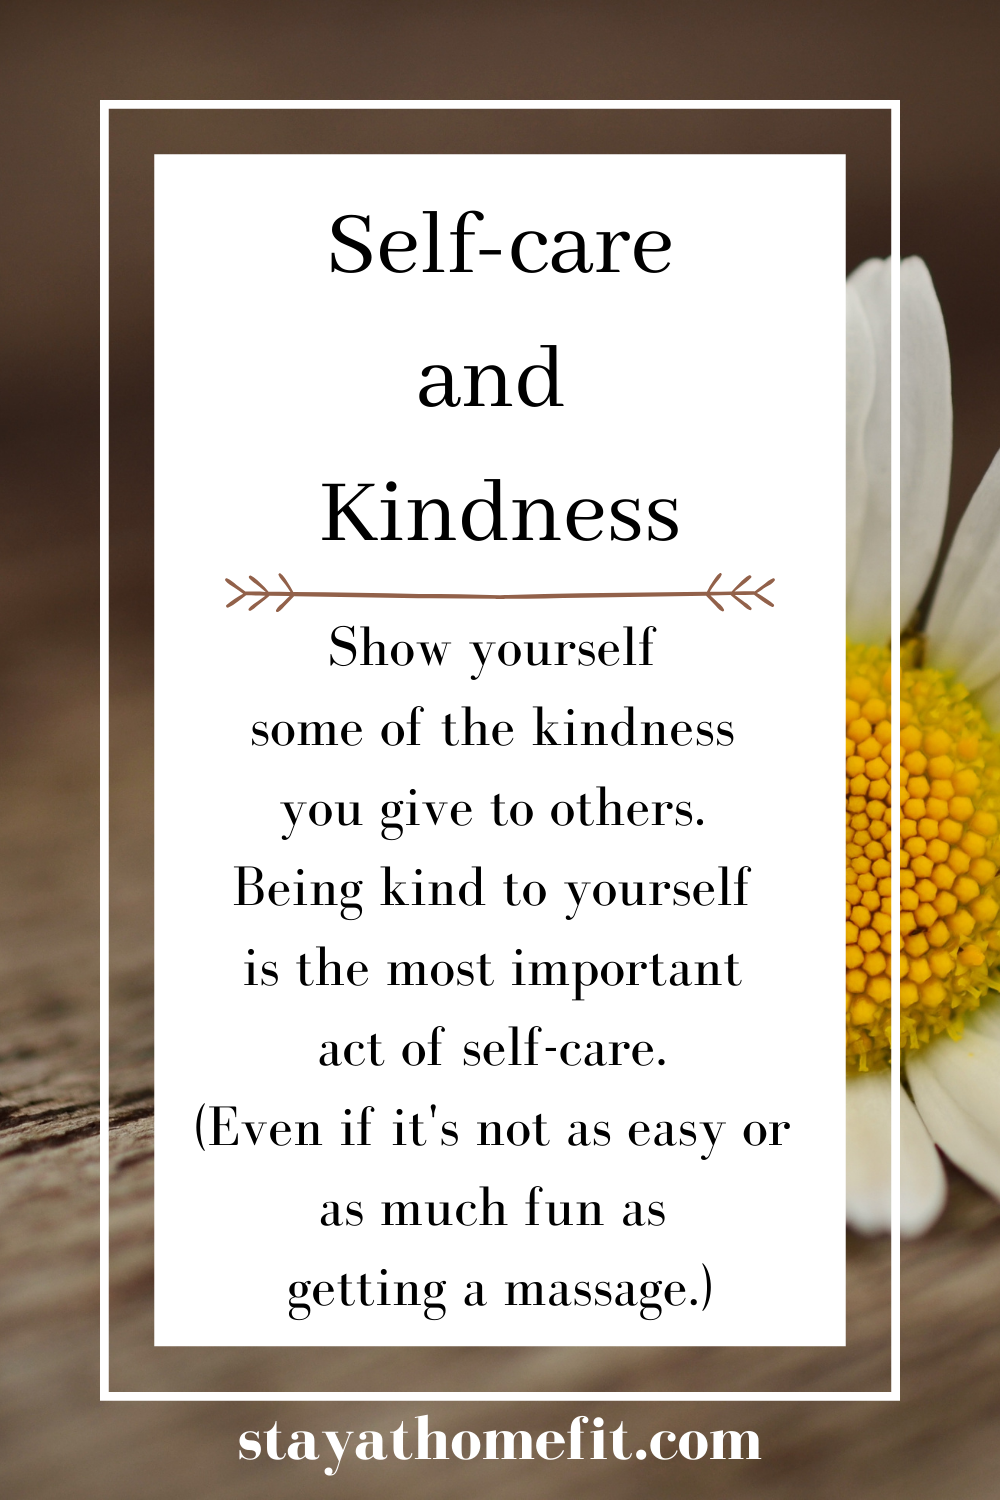 Self-care and Kindness